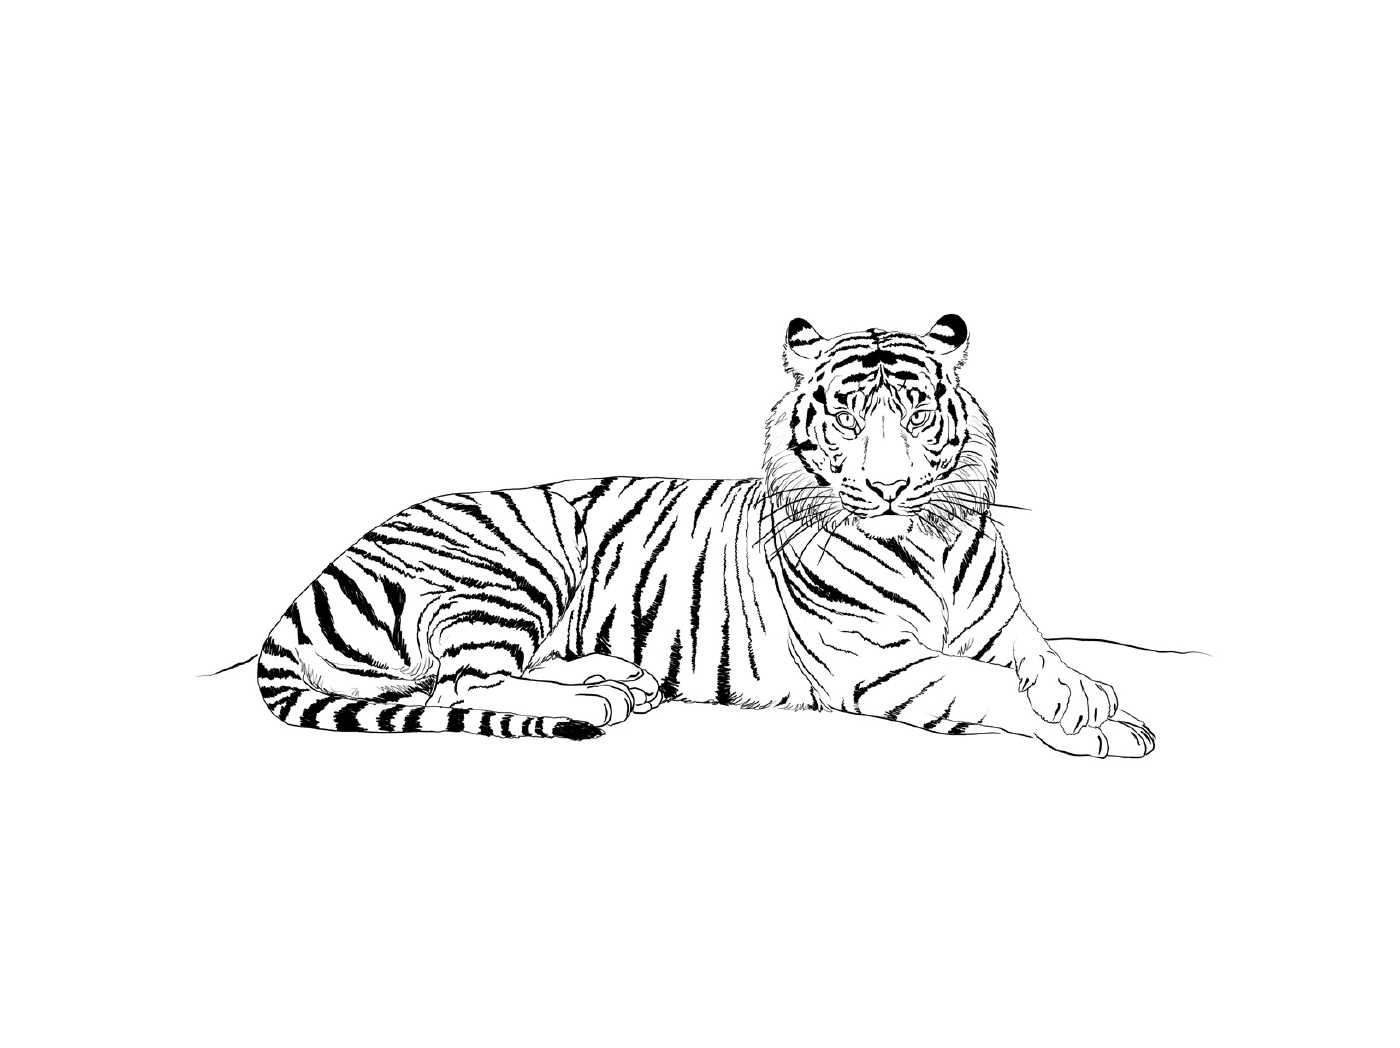  Um tigre mamífero realista 